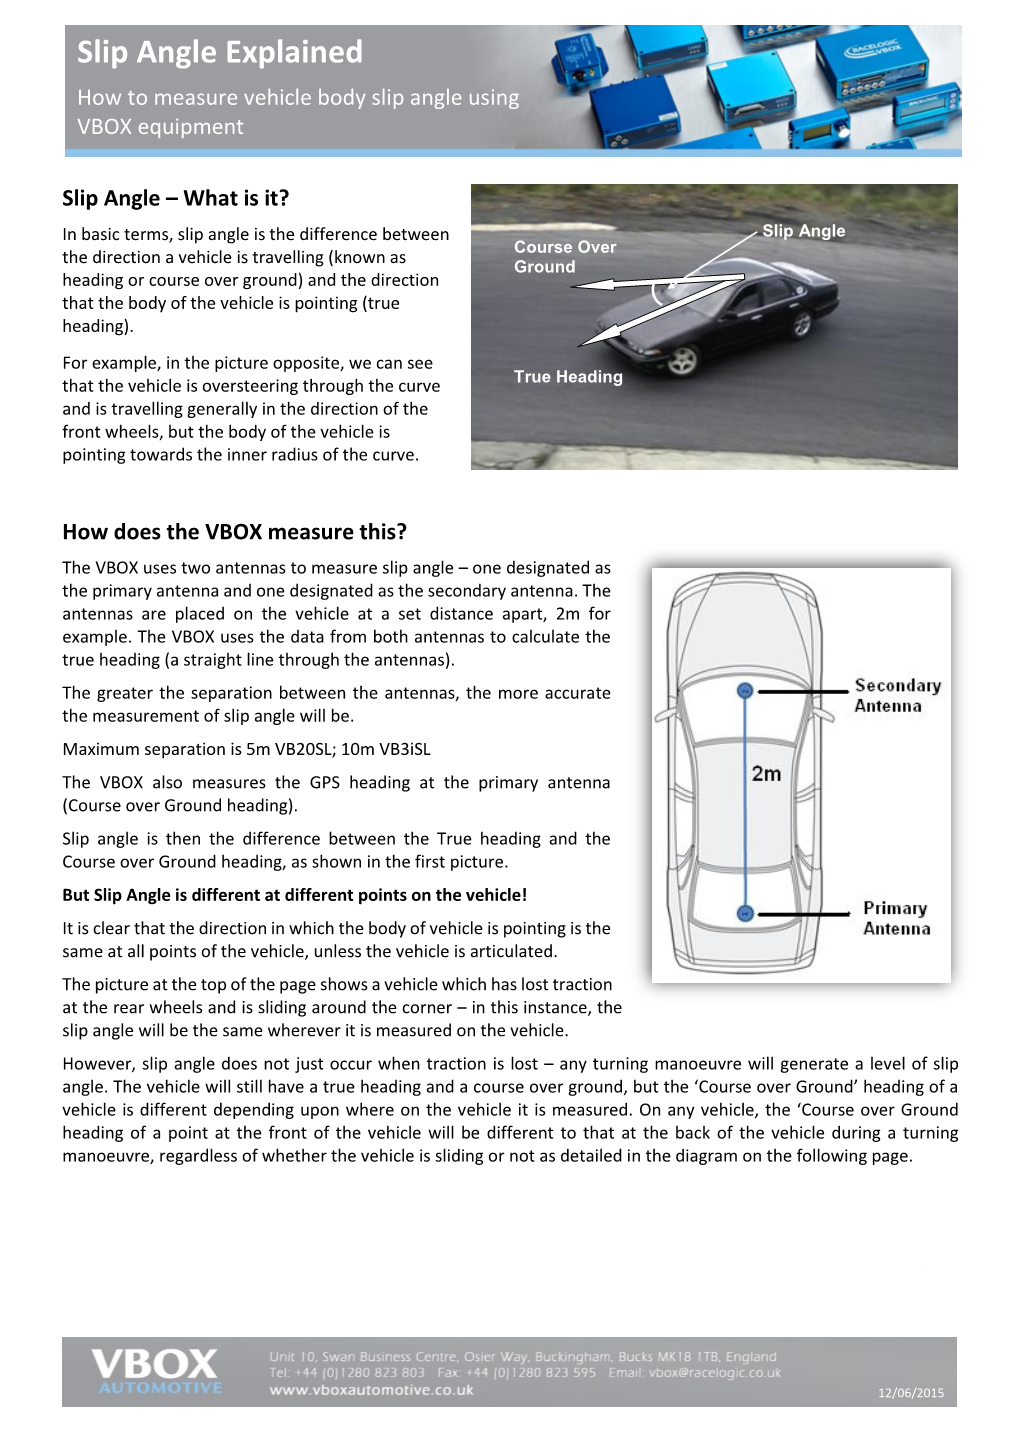 Slip Angle Explained How to Measure Vehicle Body Slip Angle Using VBOX Equipment